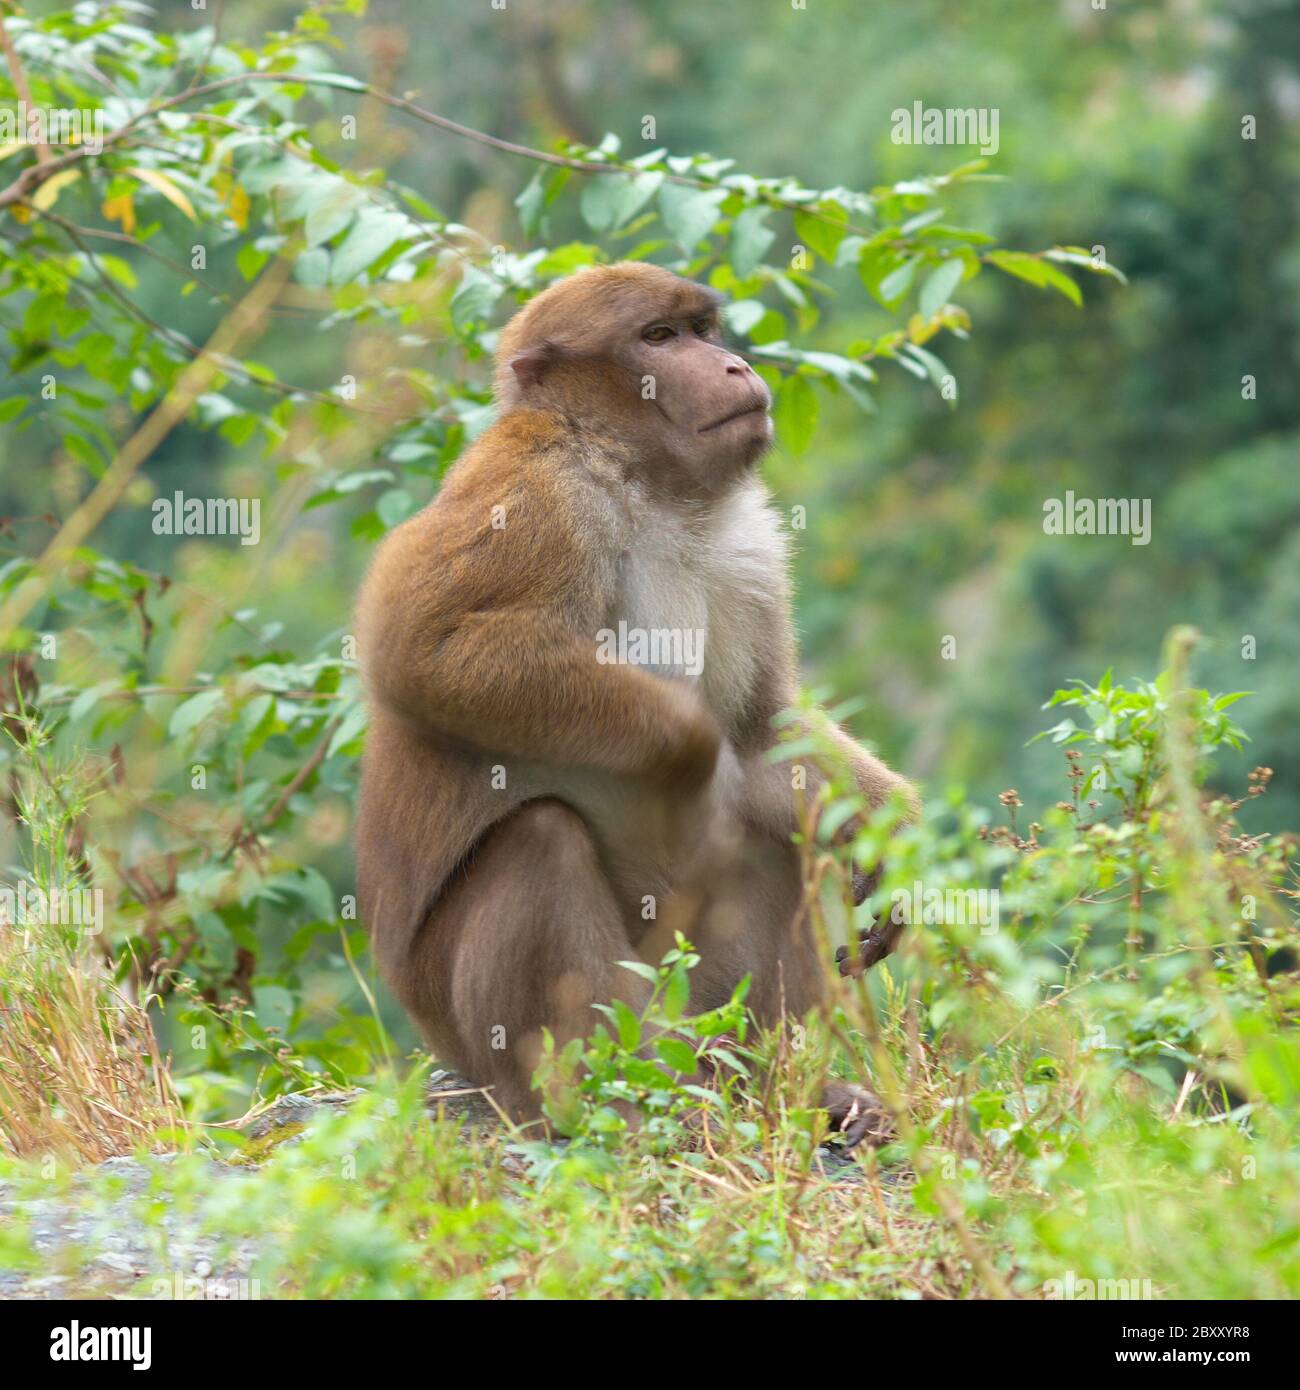 Monkey in the wild Stock Photo